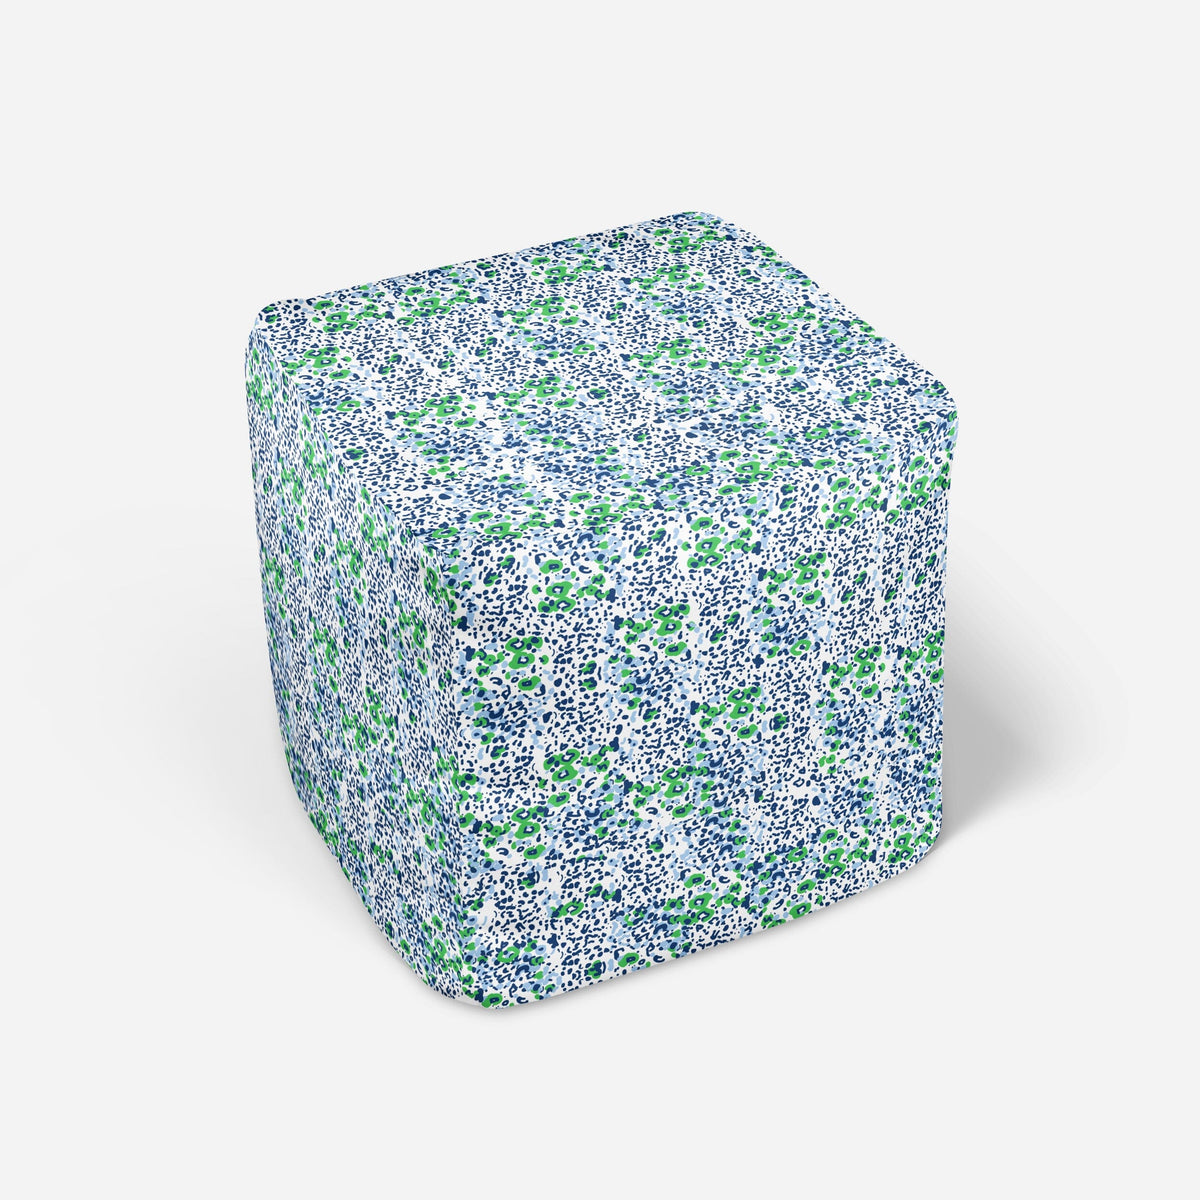 Bean Bag Cube - Poppy Field Blue & Green Room Accessories, Cubes, Poufs MWW 